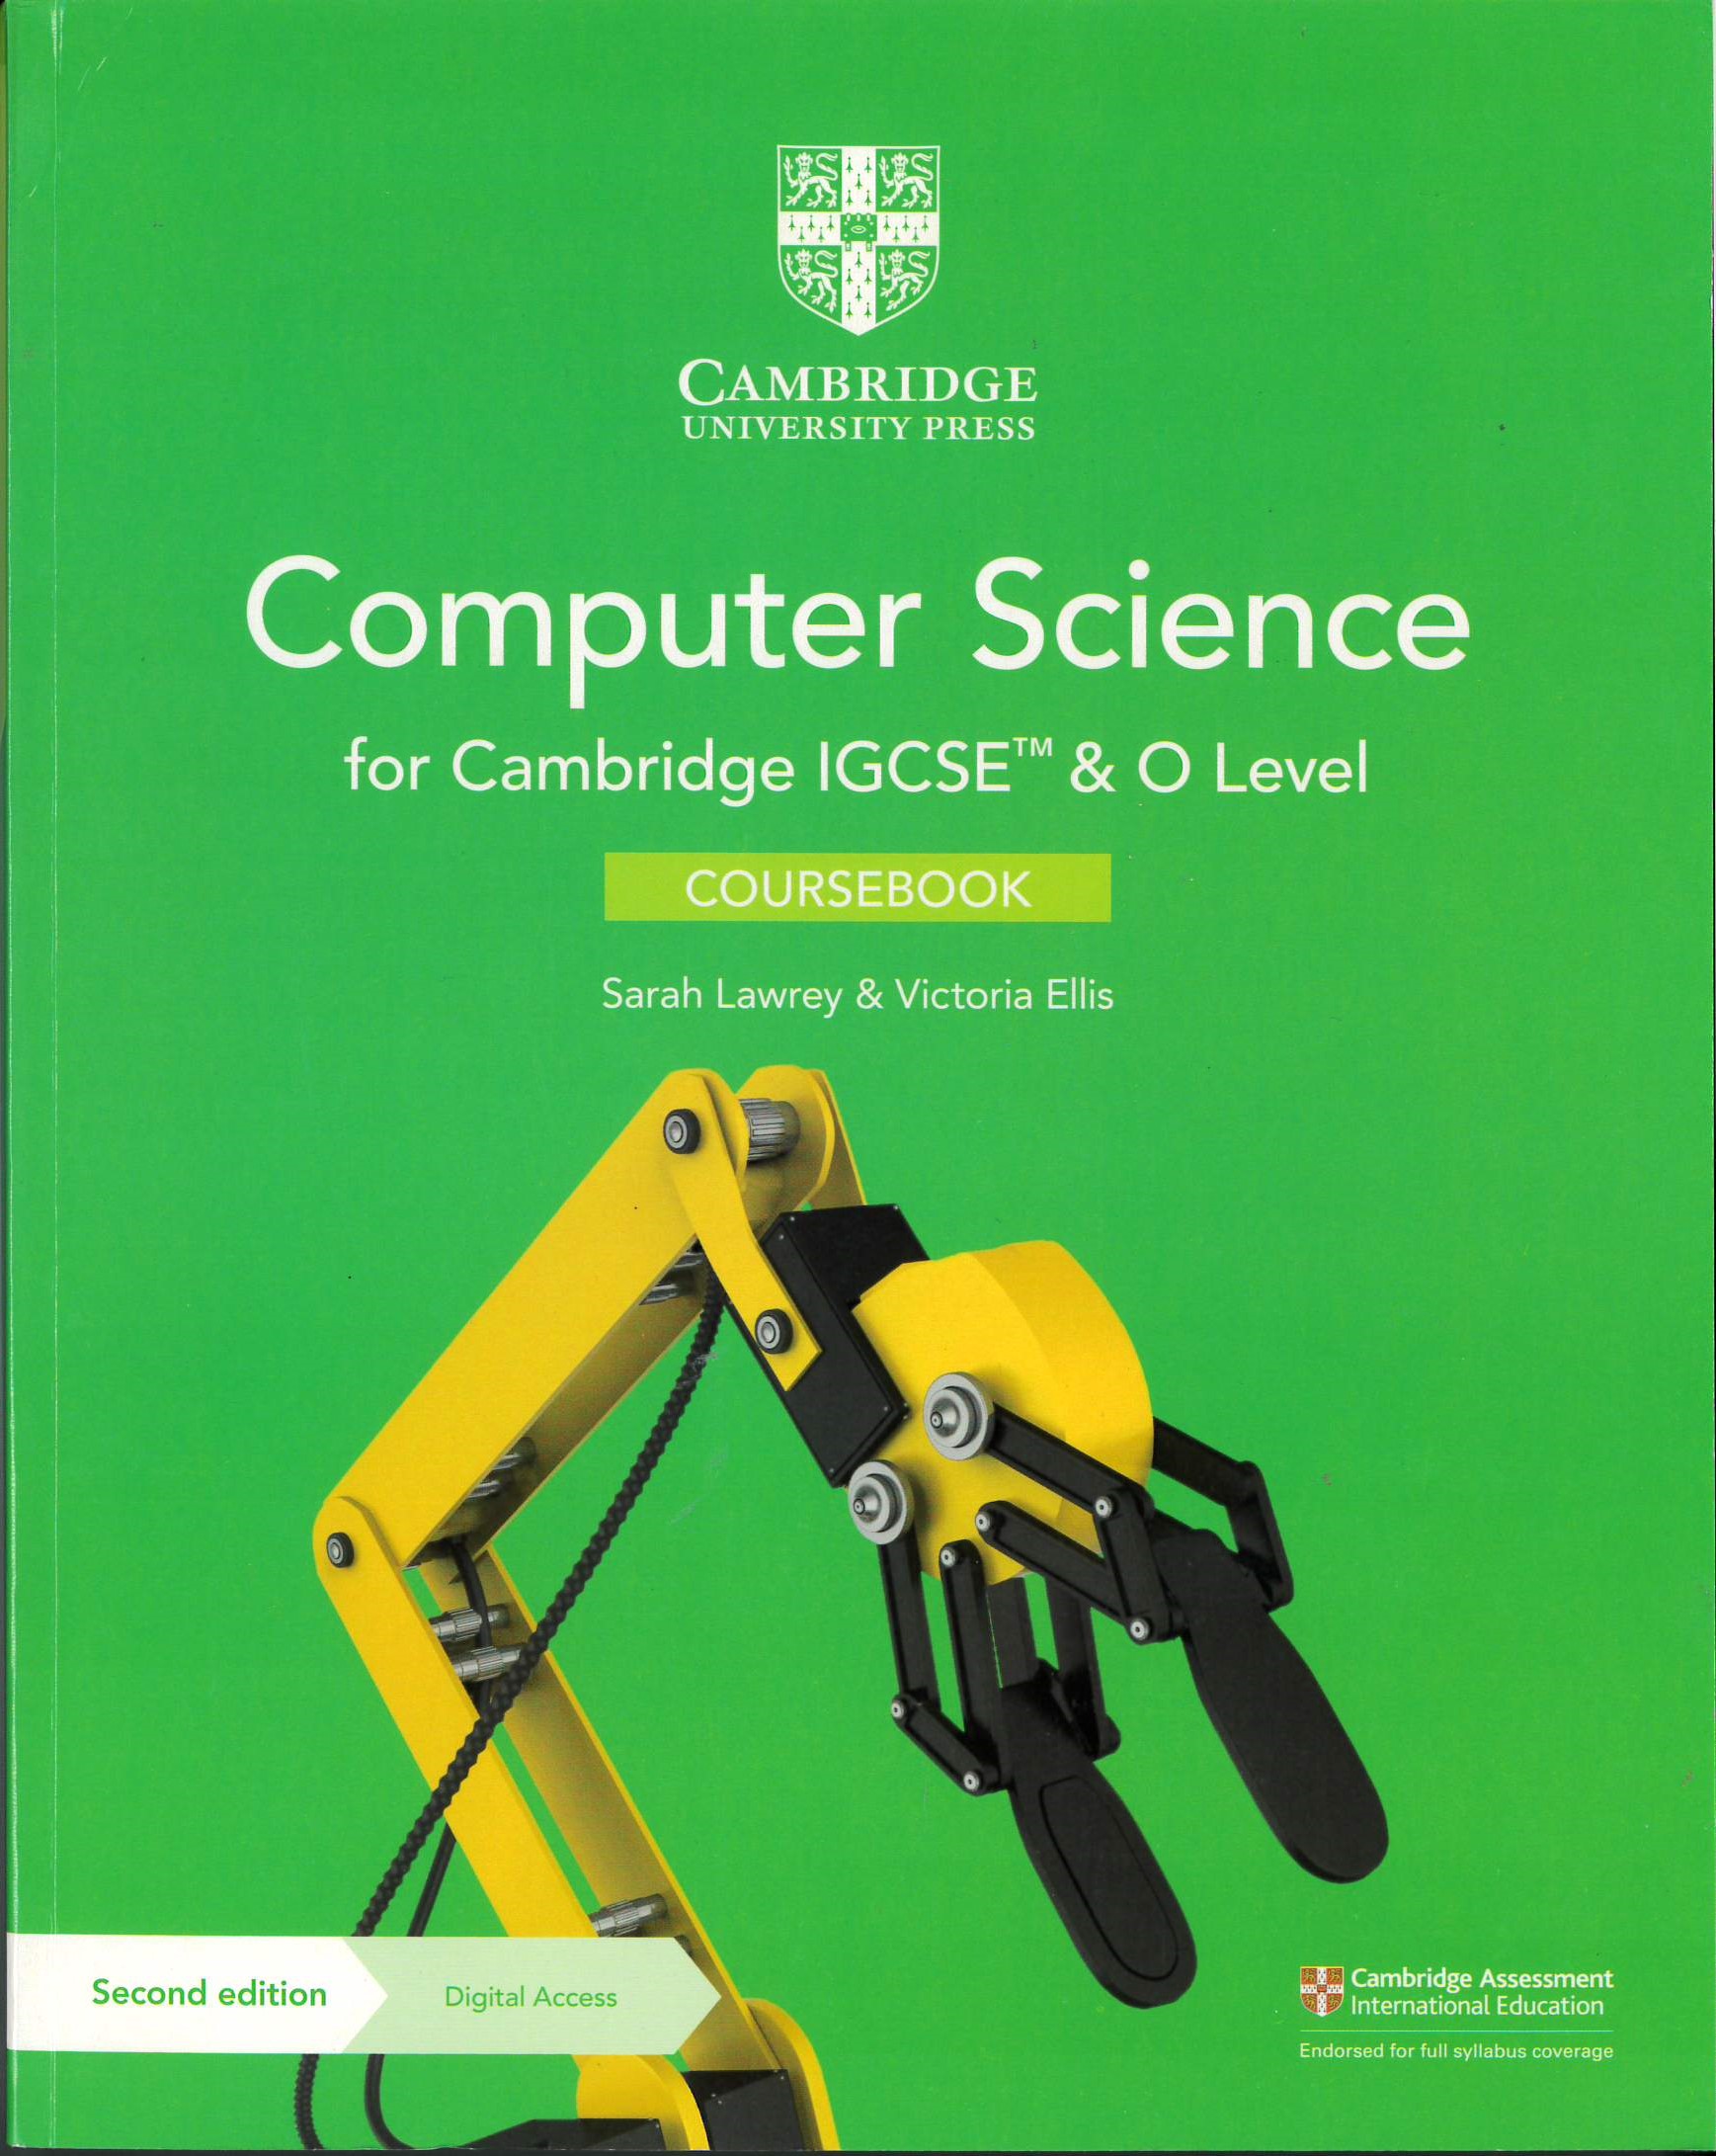 Computer science for Cambridge IGCSE and O level : coursebook